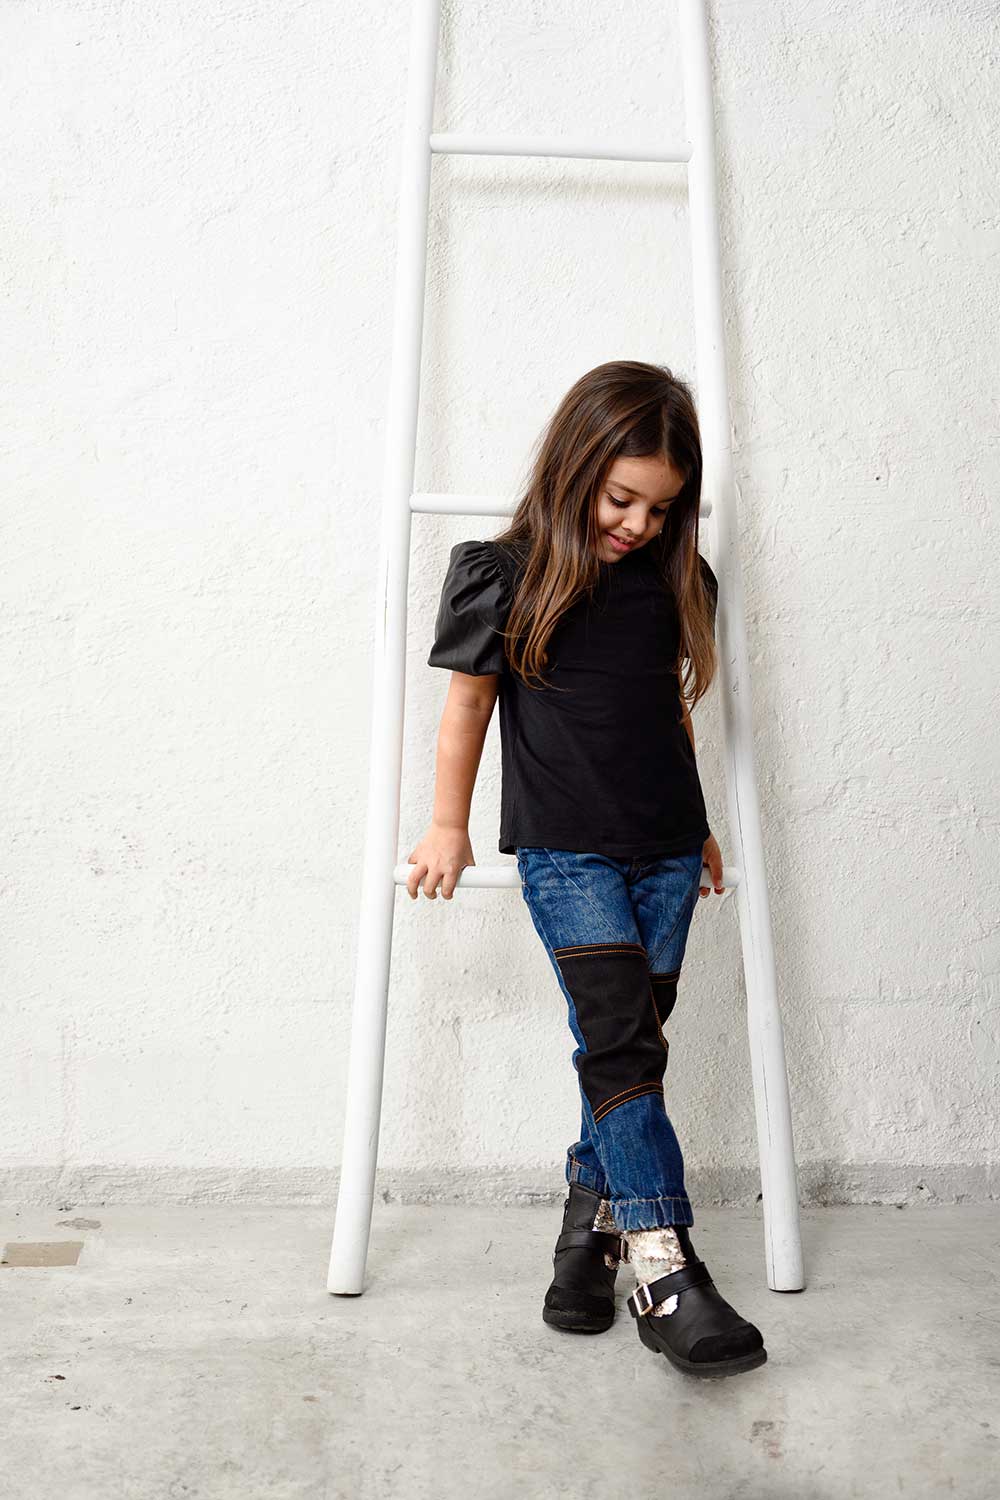 Girl stood next to a wooden ladder